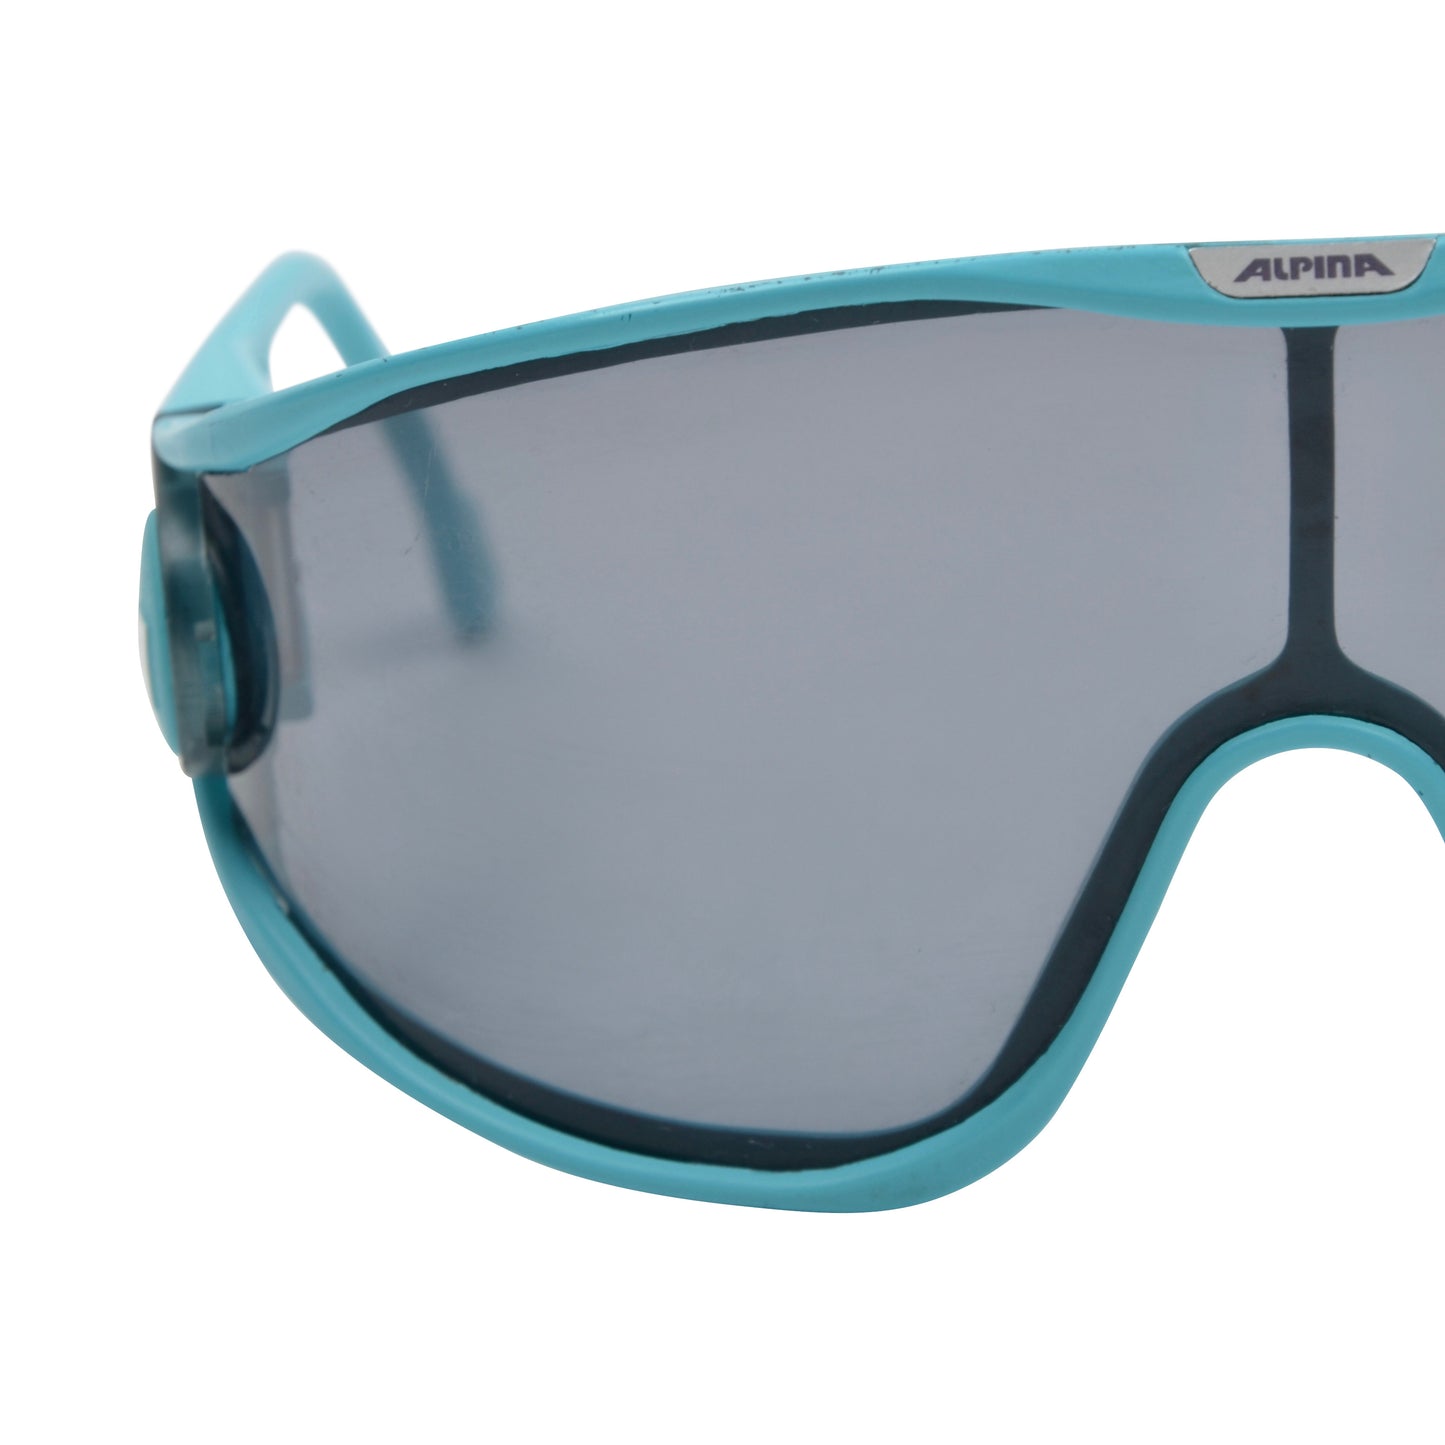 Vintage Alpina Swing Shield Sonnenbrille - Aqua